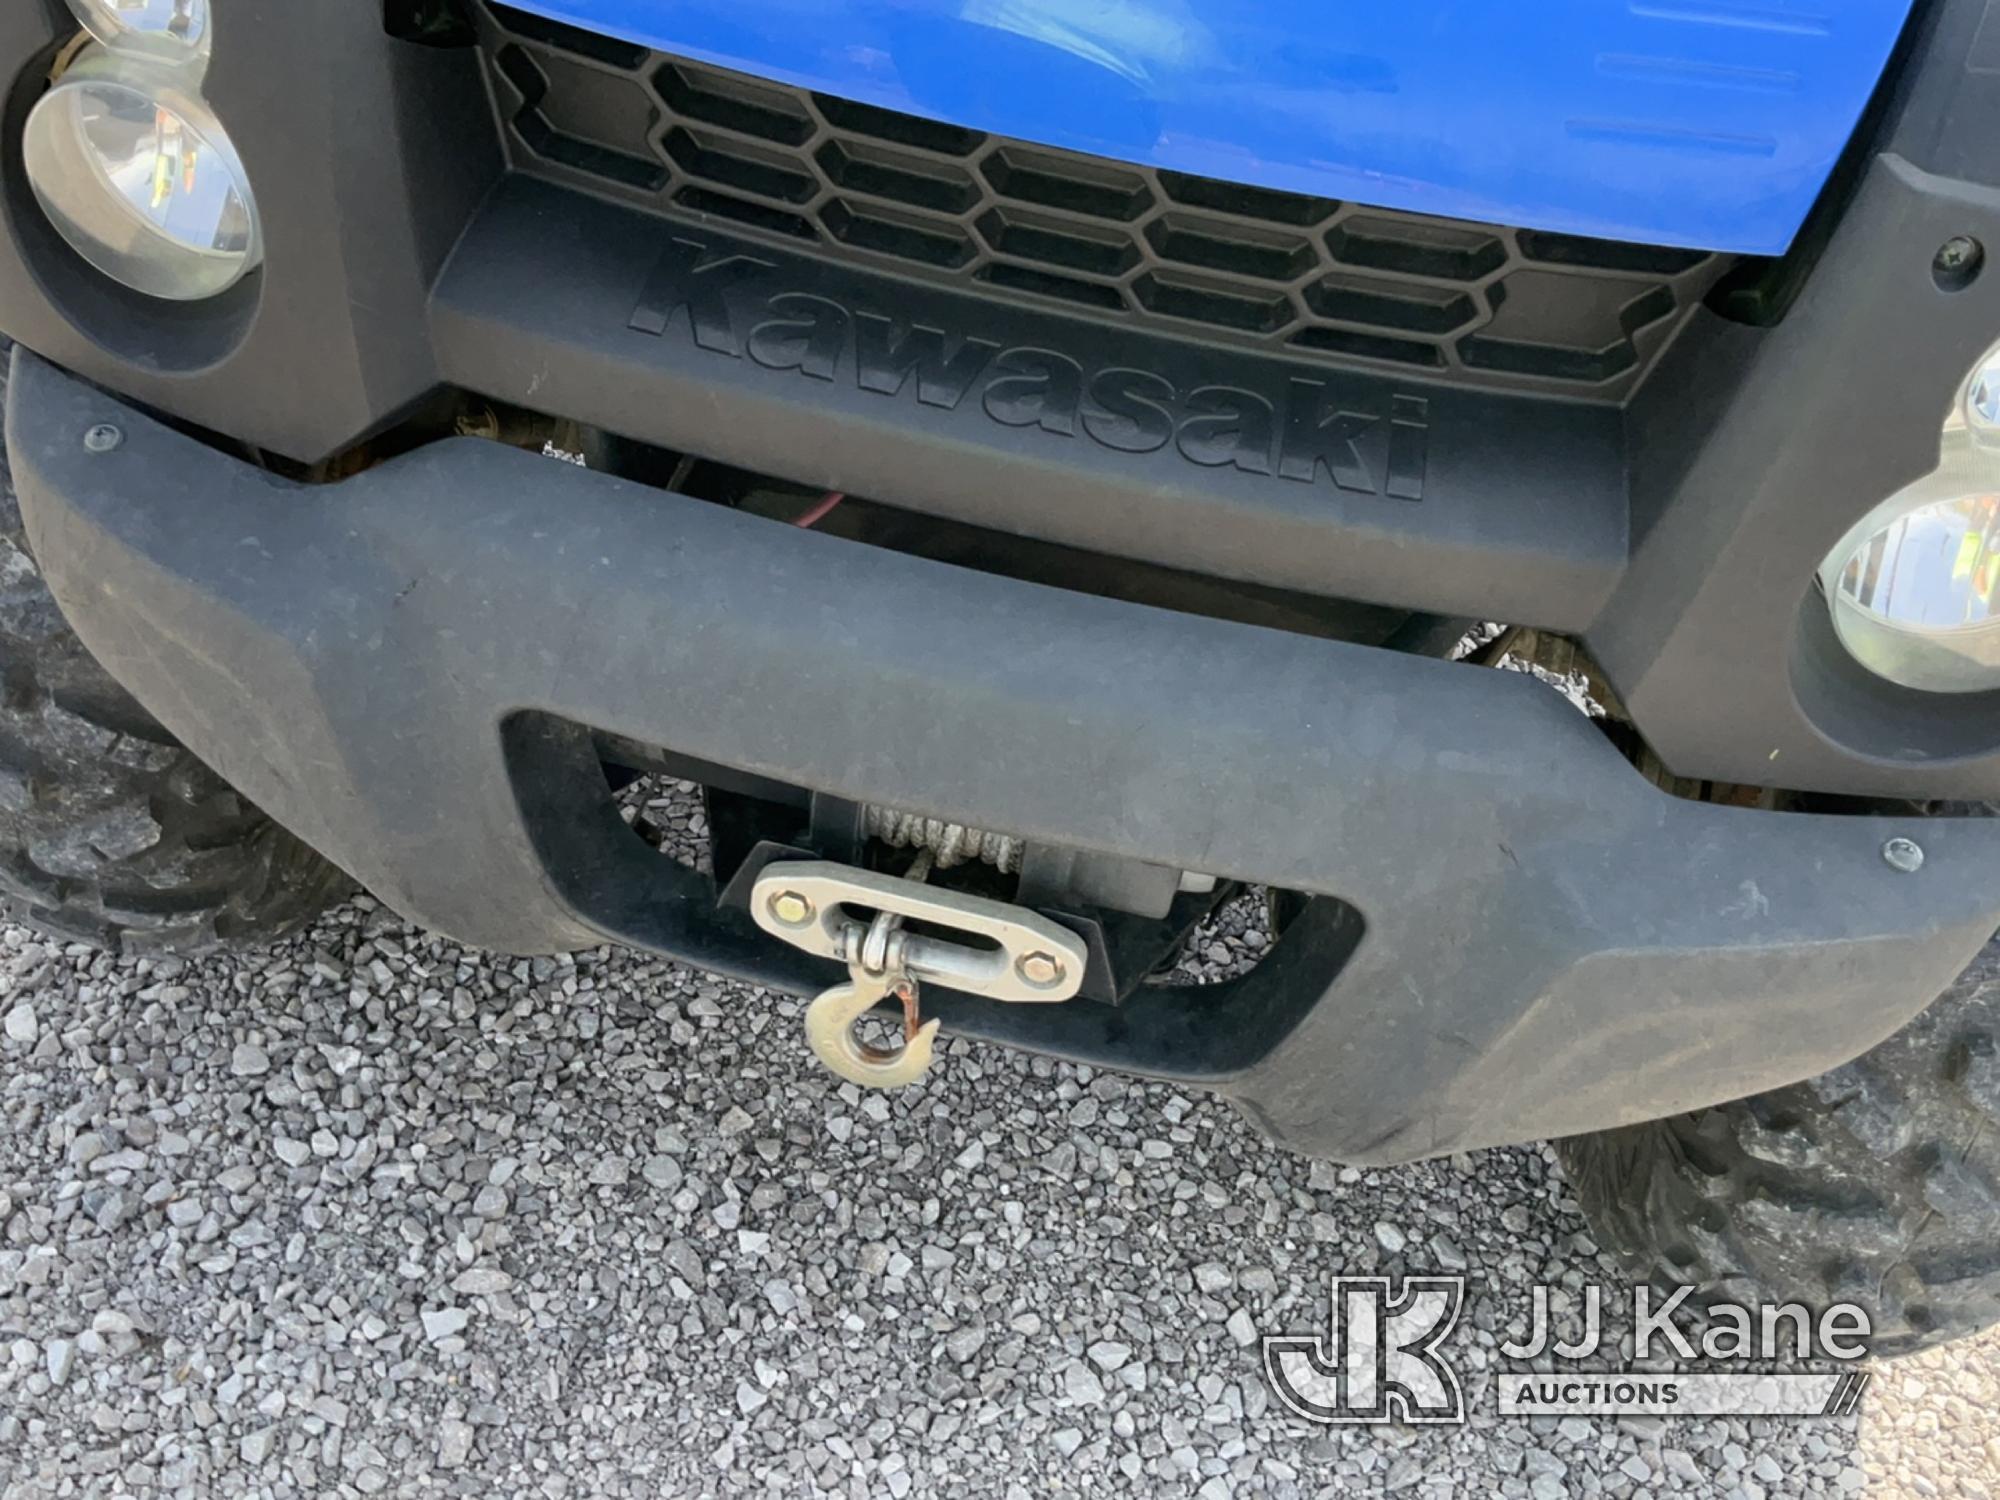 (Verona, KY) 2014 Kawasaki Mule 610 4X4 Utility Vehicle Runs & Moves) (Oil Leak